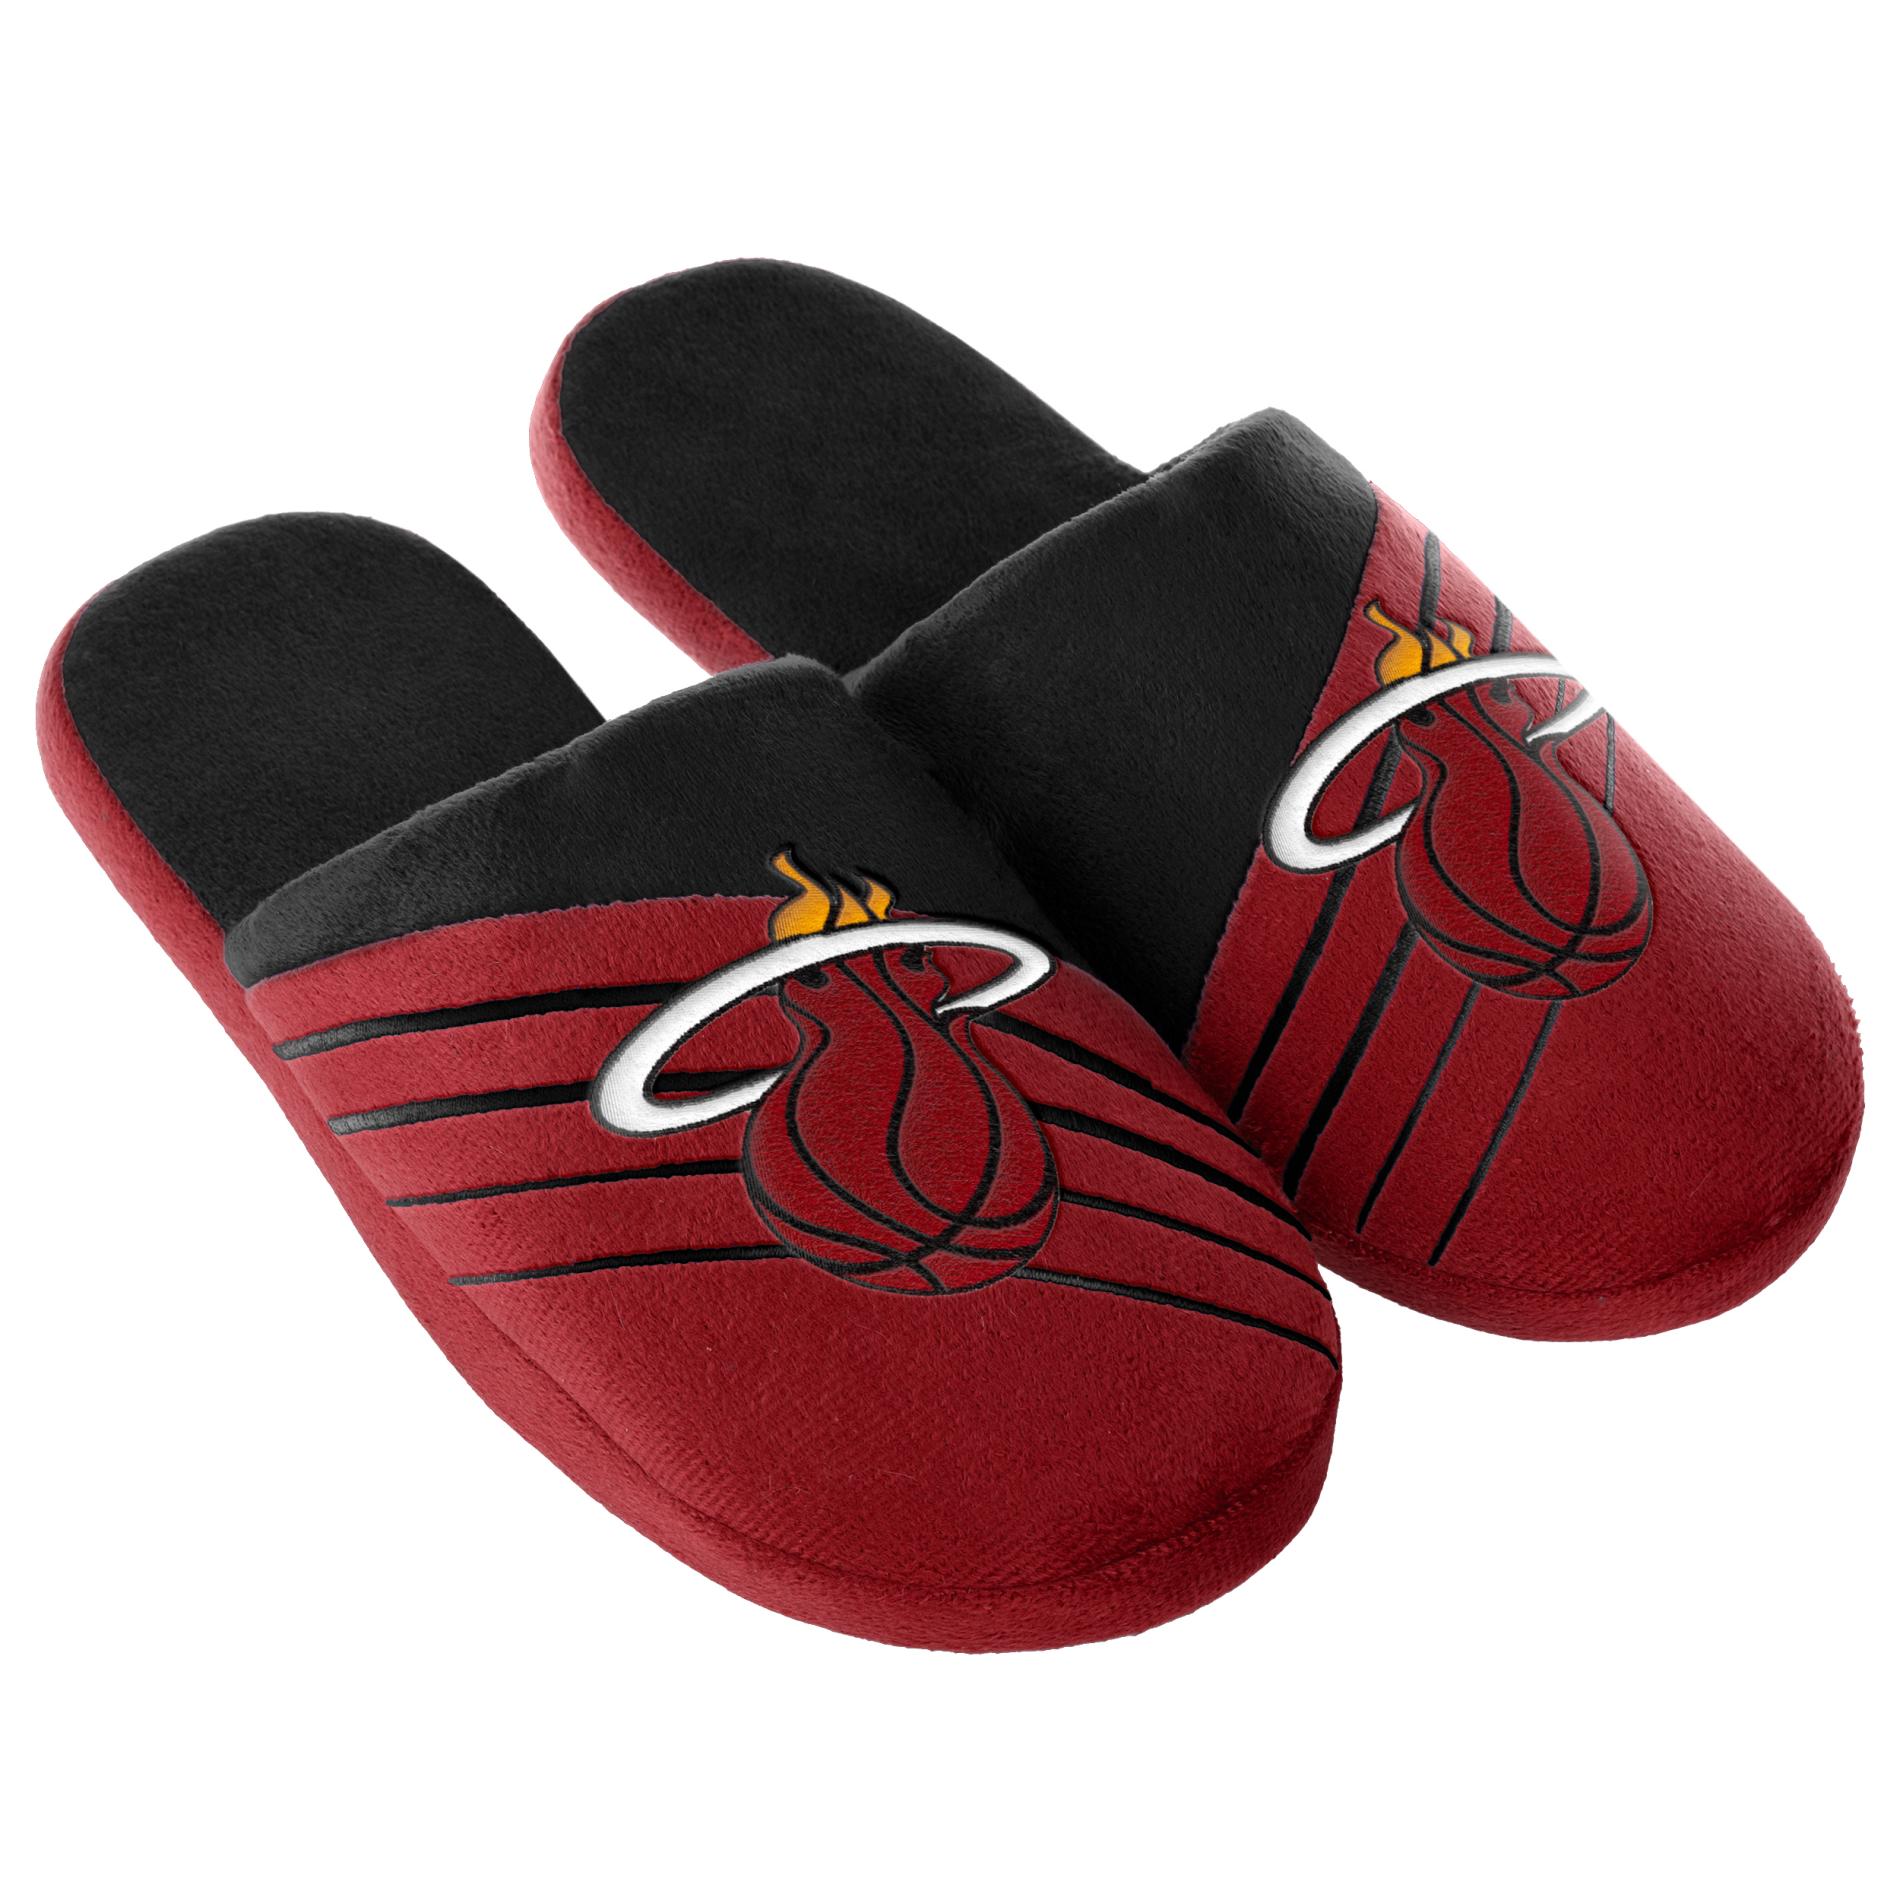 Men's Miami Heat Red/Black Slippers